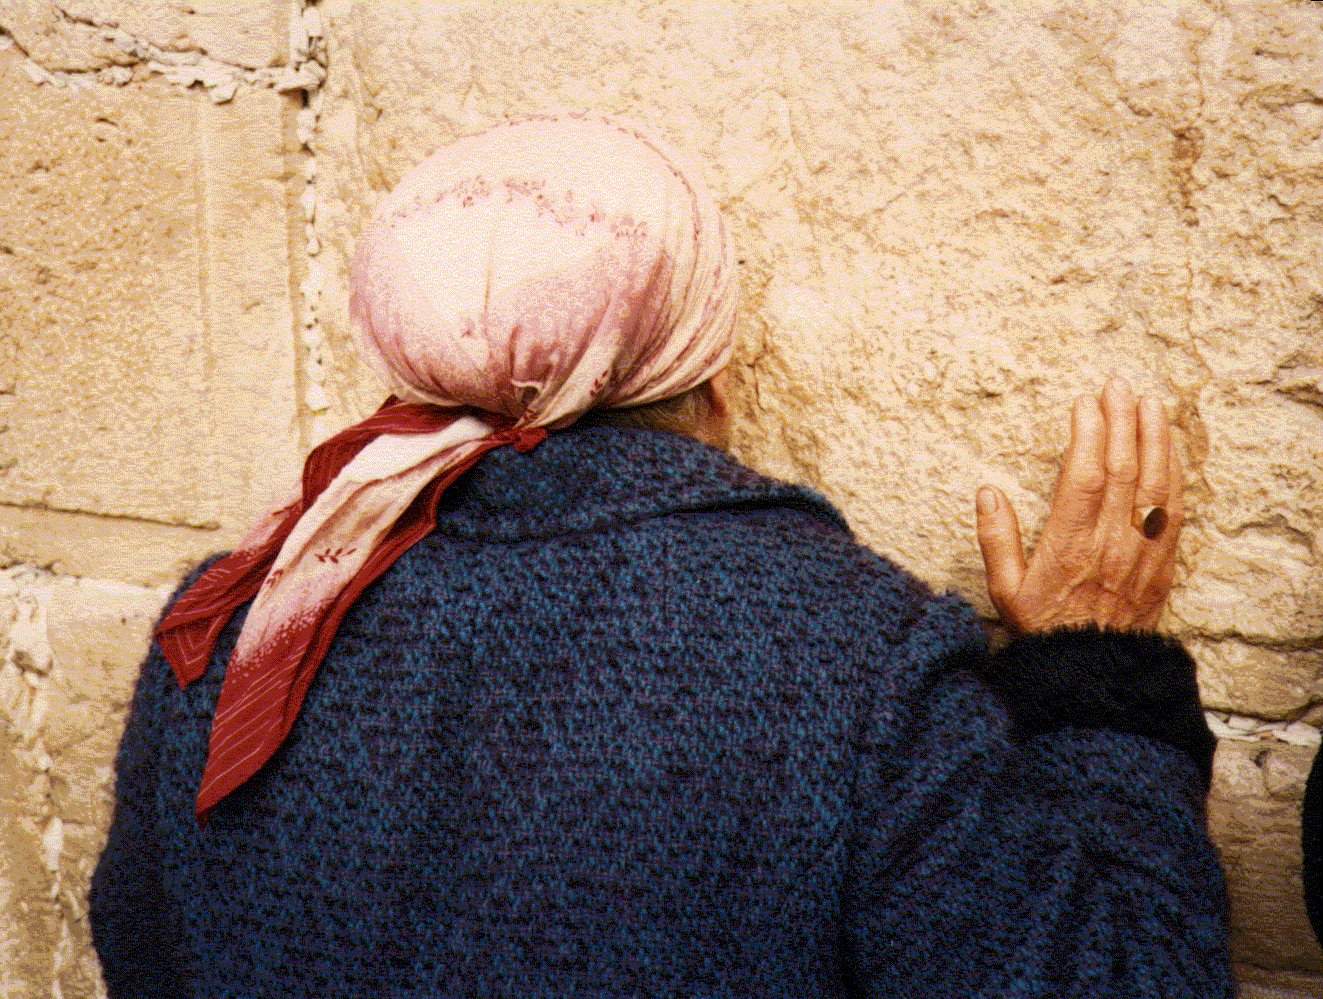 Woman at the Wailing Wall in Jerusalem